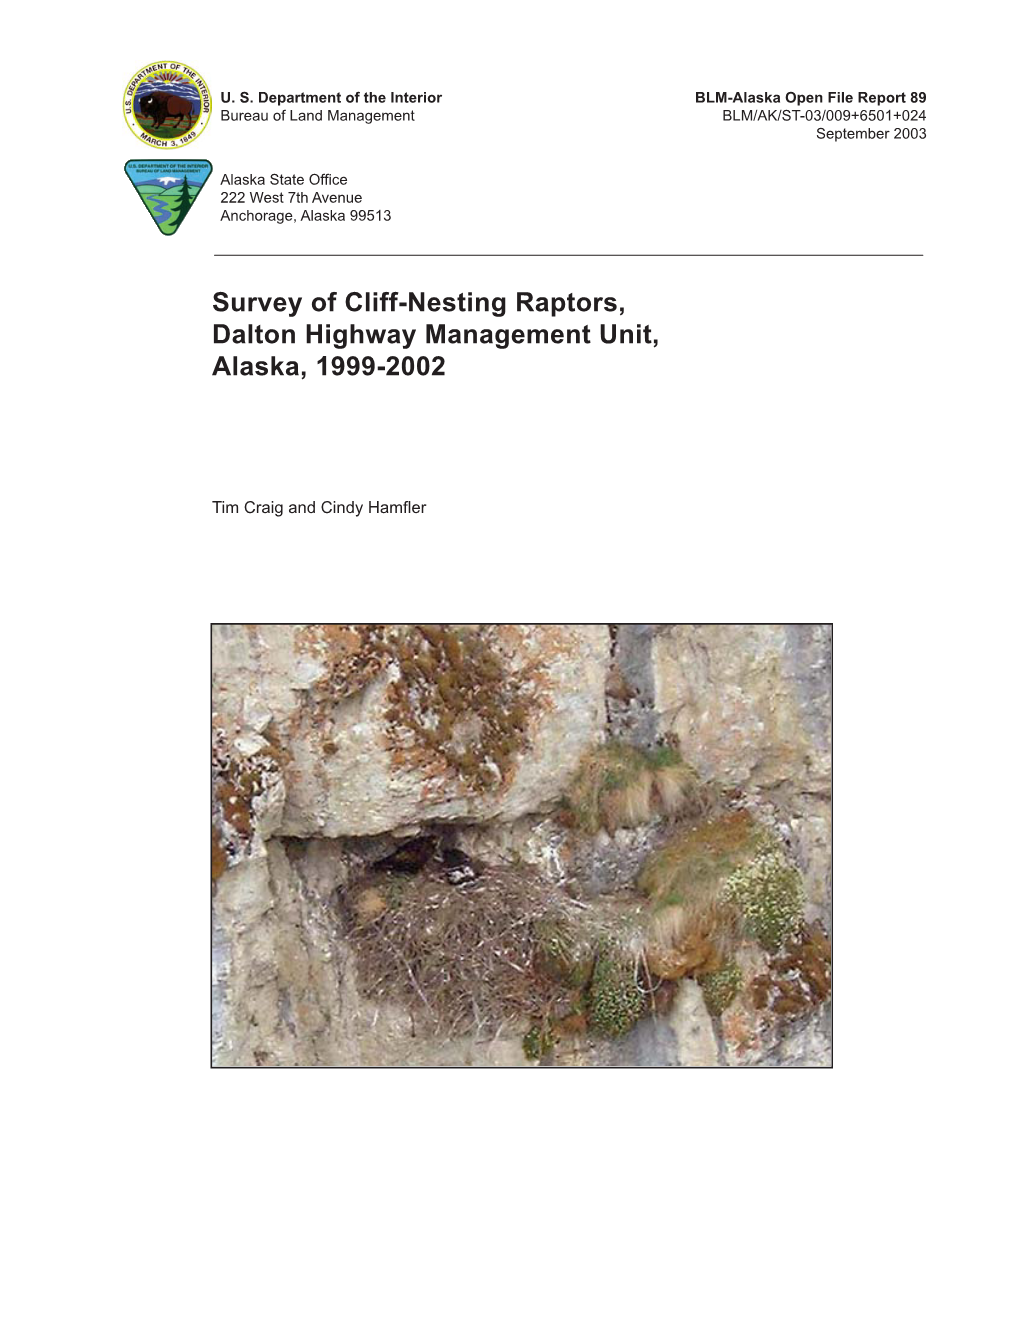 Survey of Cliff-Nesting Raptors, Dalton Highway Management Unit, Alaska, 1999-2002